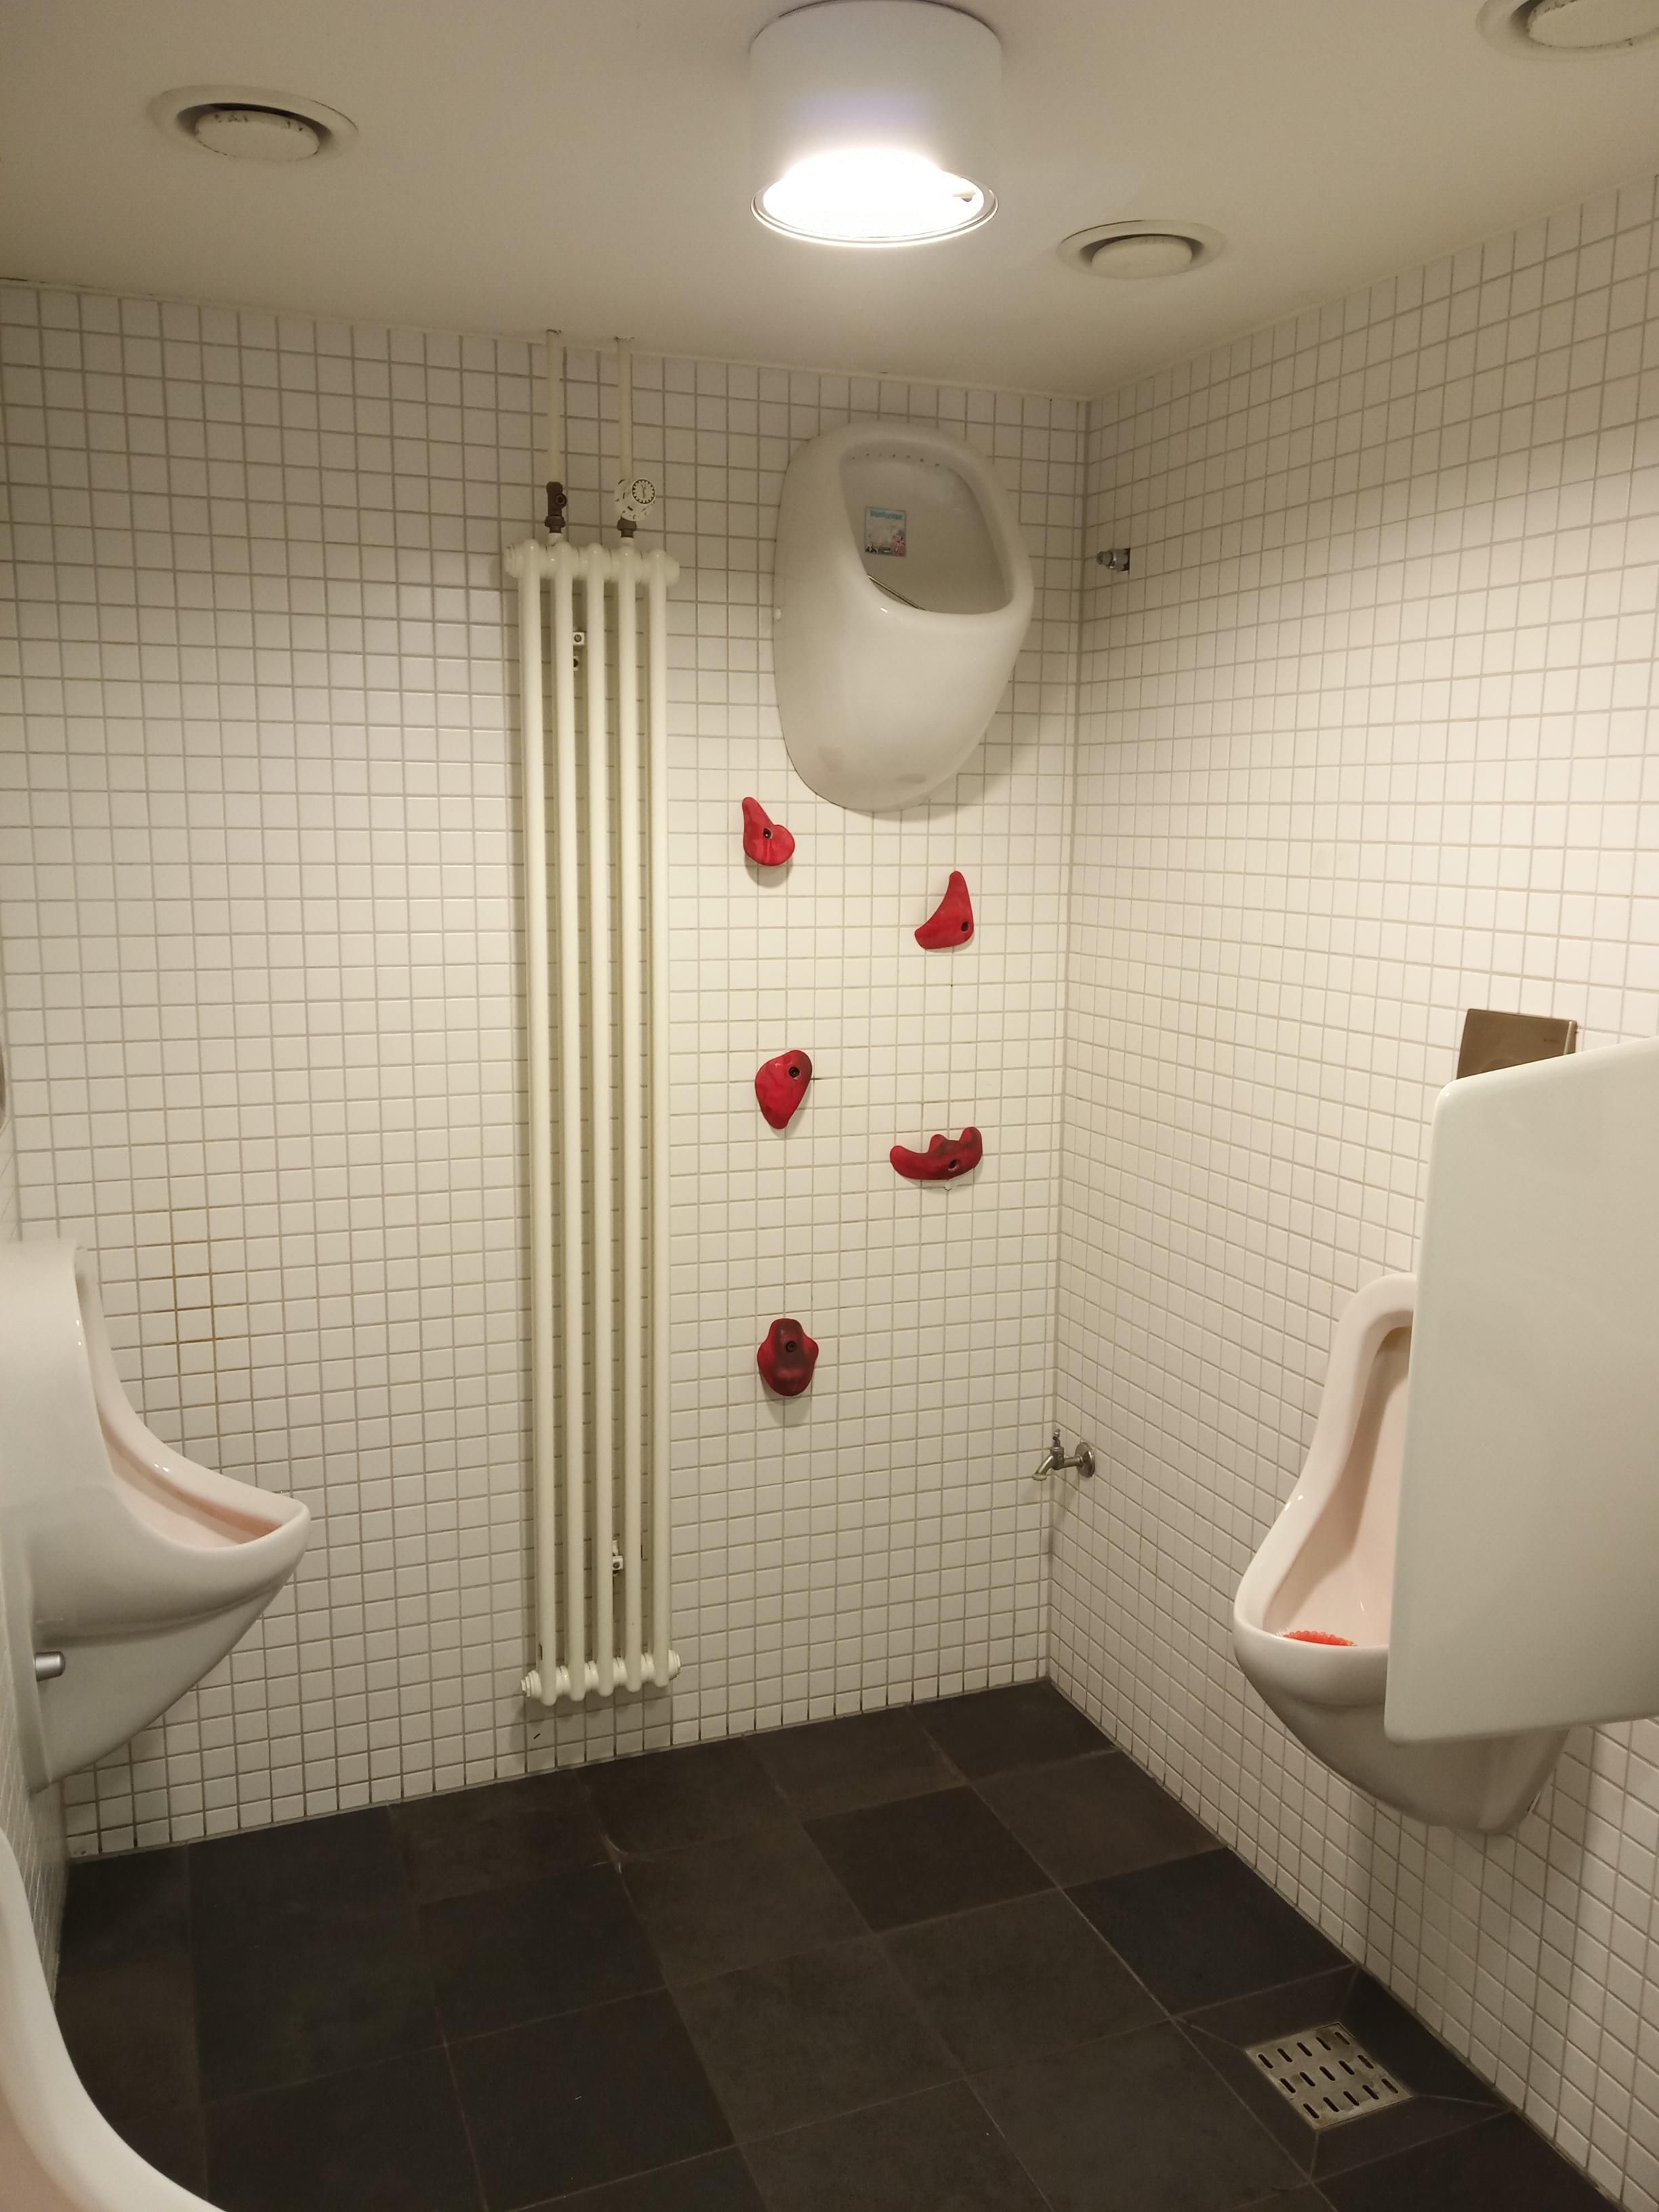 A men's bathroom in a restaurant. Art installation.